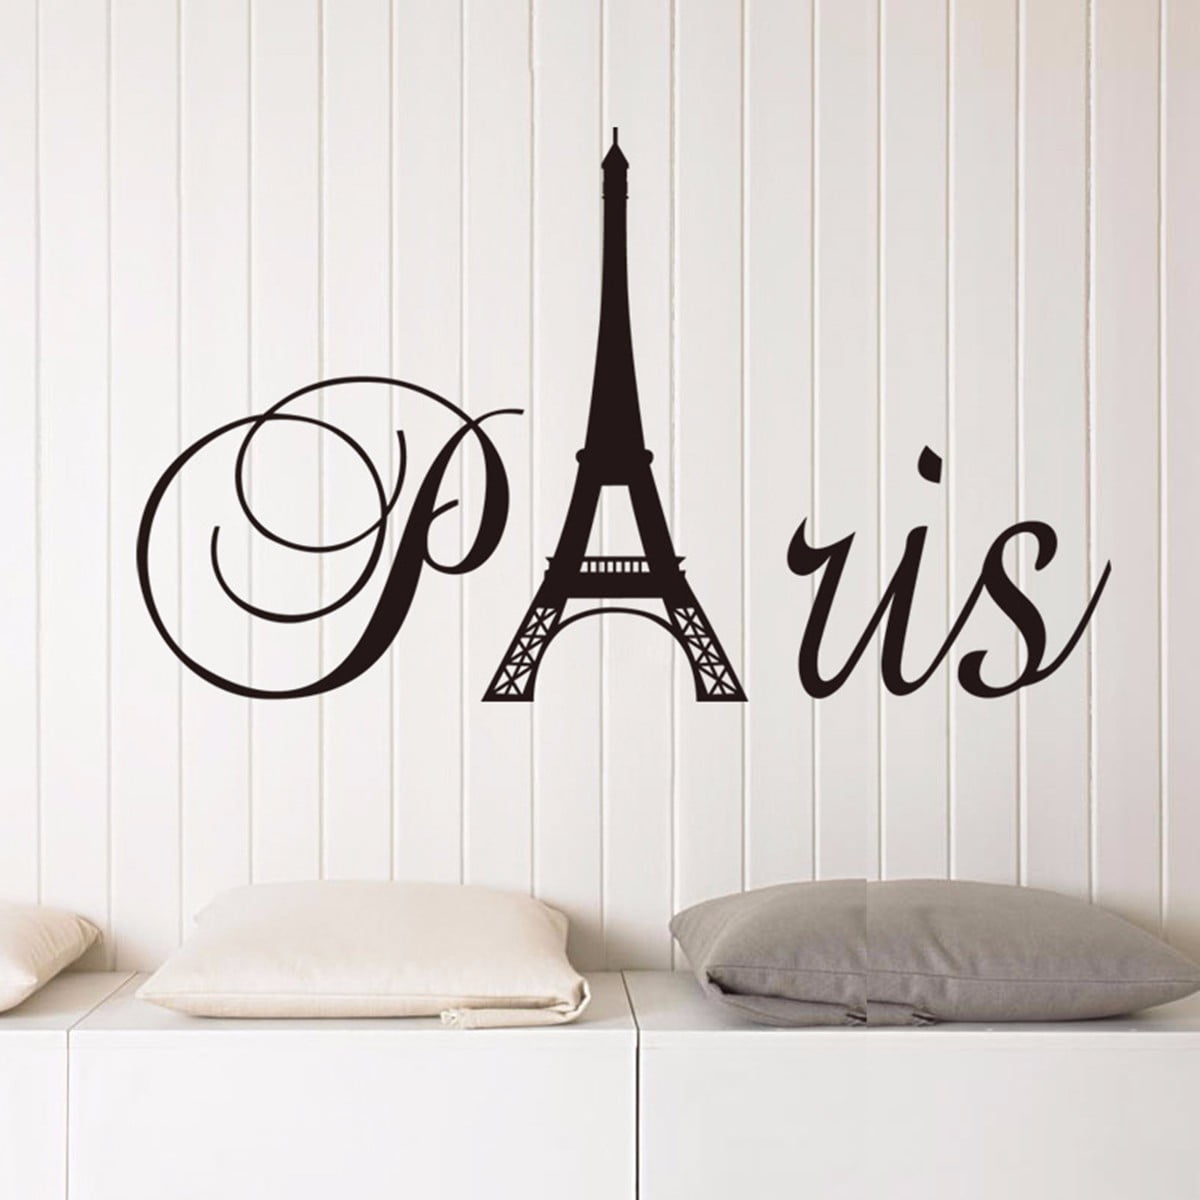 Eiffel Tower Paris Style Wall Sticker Vinyl Decal Mural Home Decor Removab.*